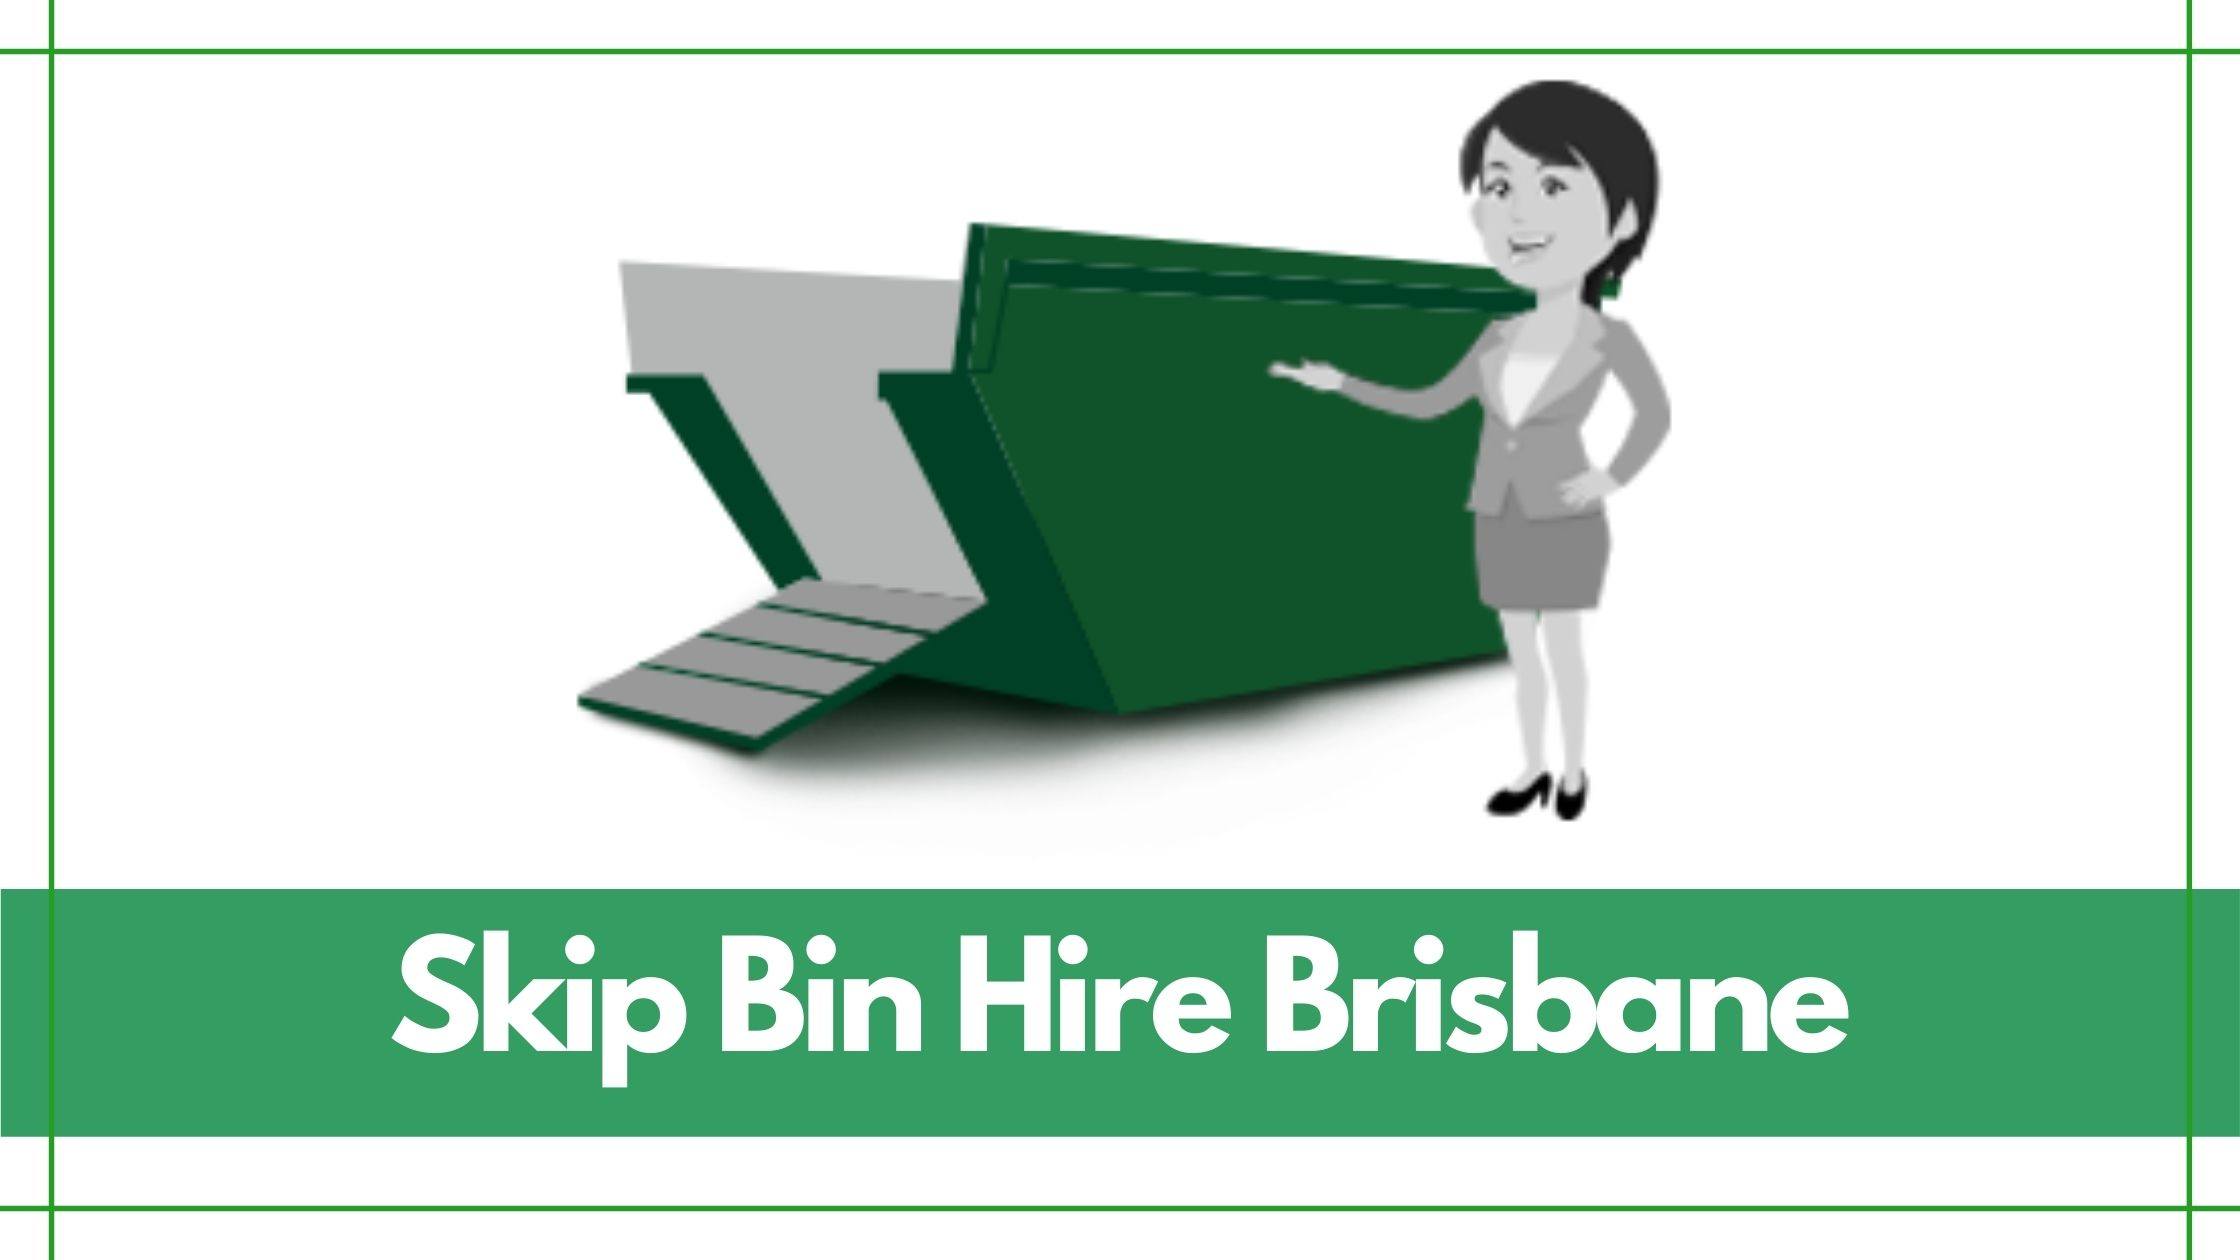 Tips for successful Skip Bin Hire Brisbane 